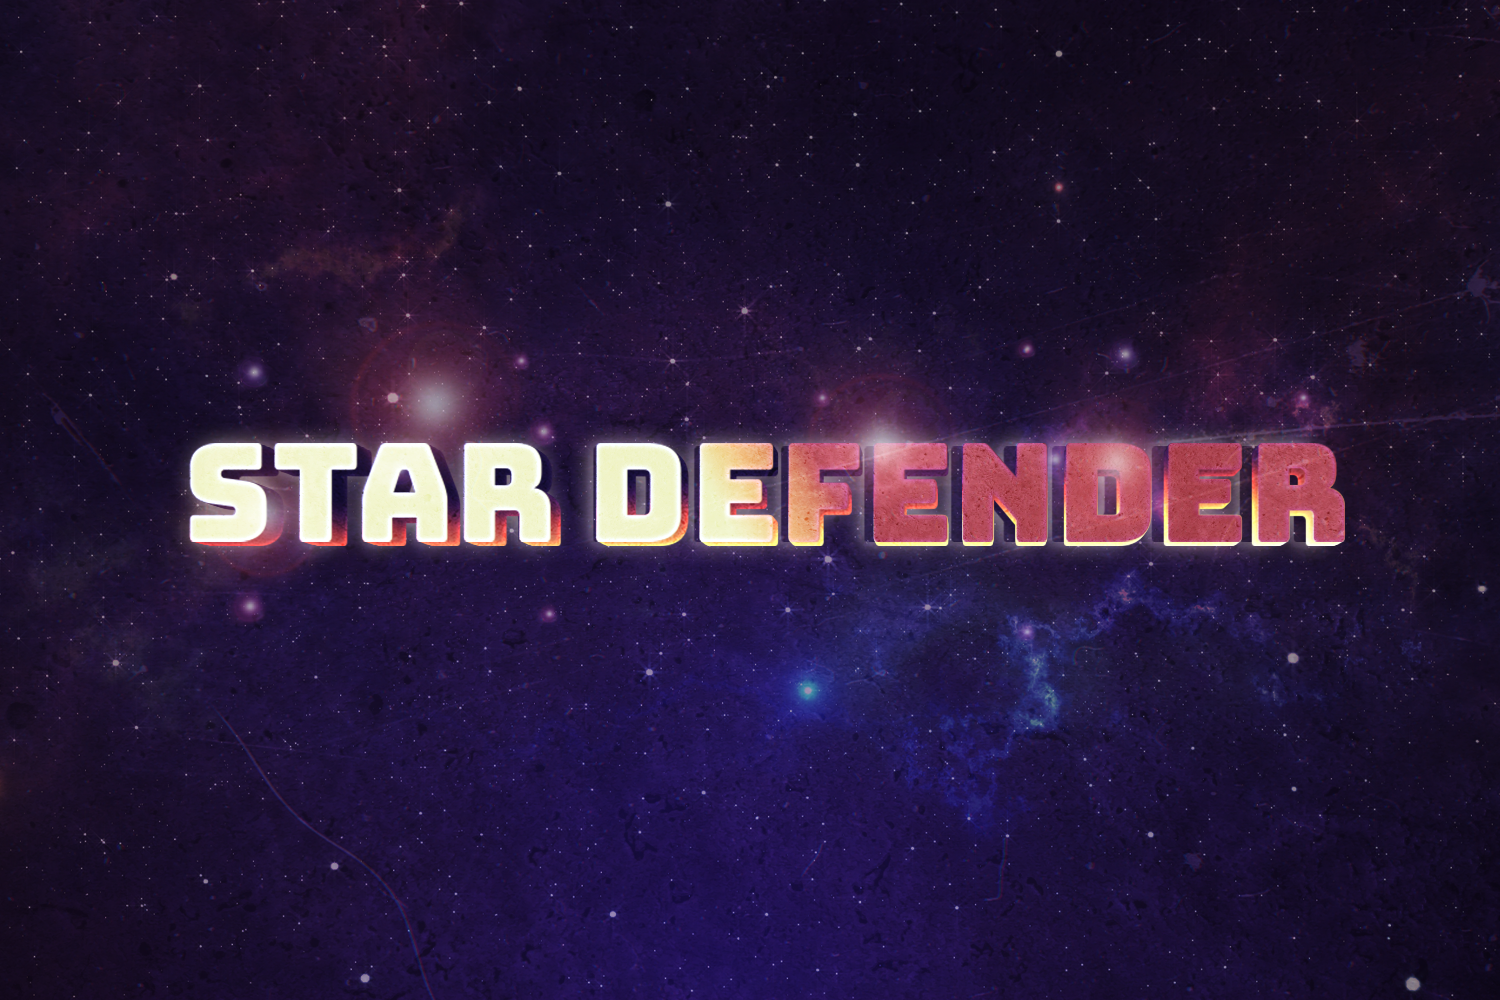 Star Defender - Spaceshooter Game Assets